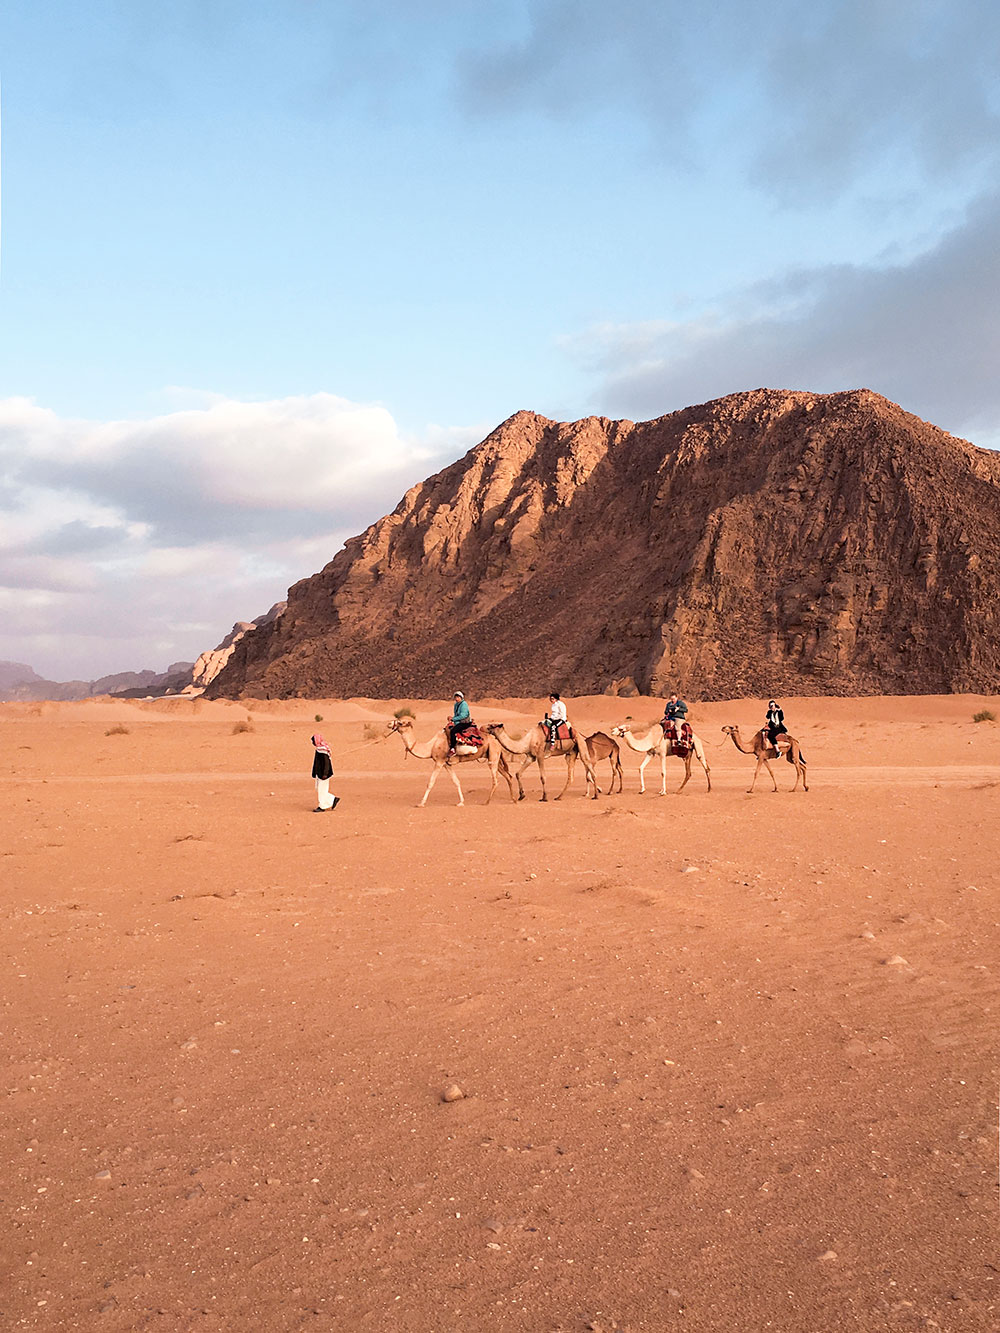 Chameau, Wadi Rum, Jordanie / Camel, Wadi Rum, Jordan